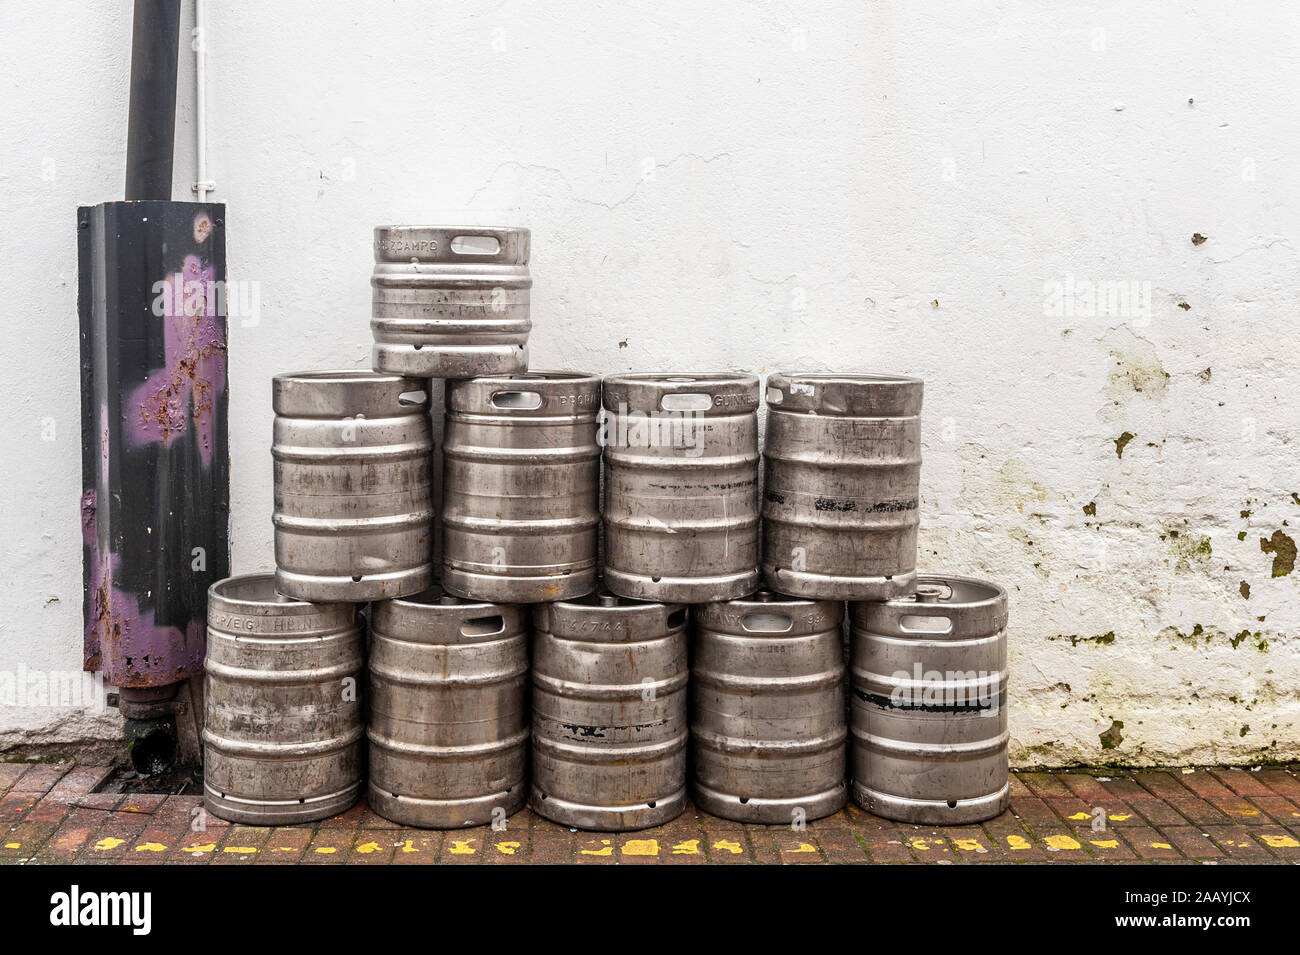 Svuota barili di birra in attesa di raccolta al di fuori di un pub in Irlanda. Foto Stock